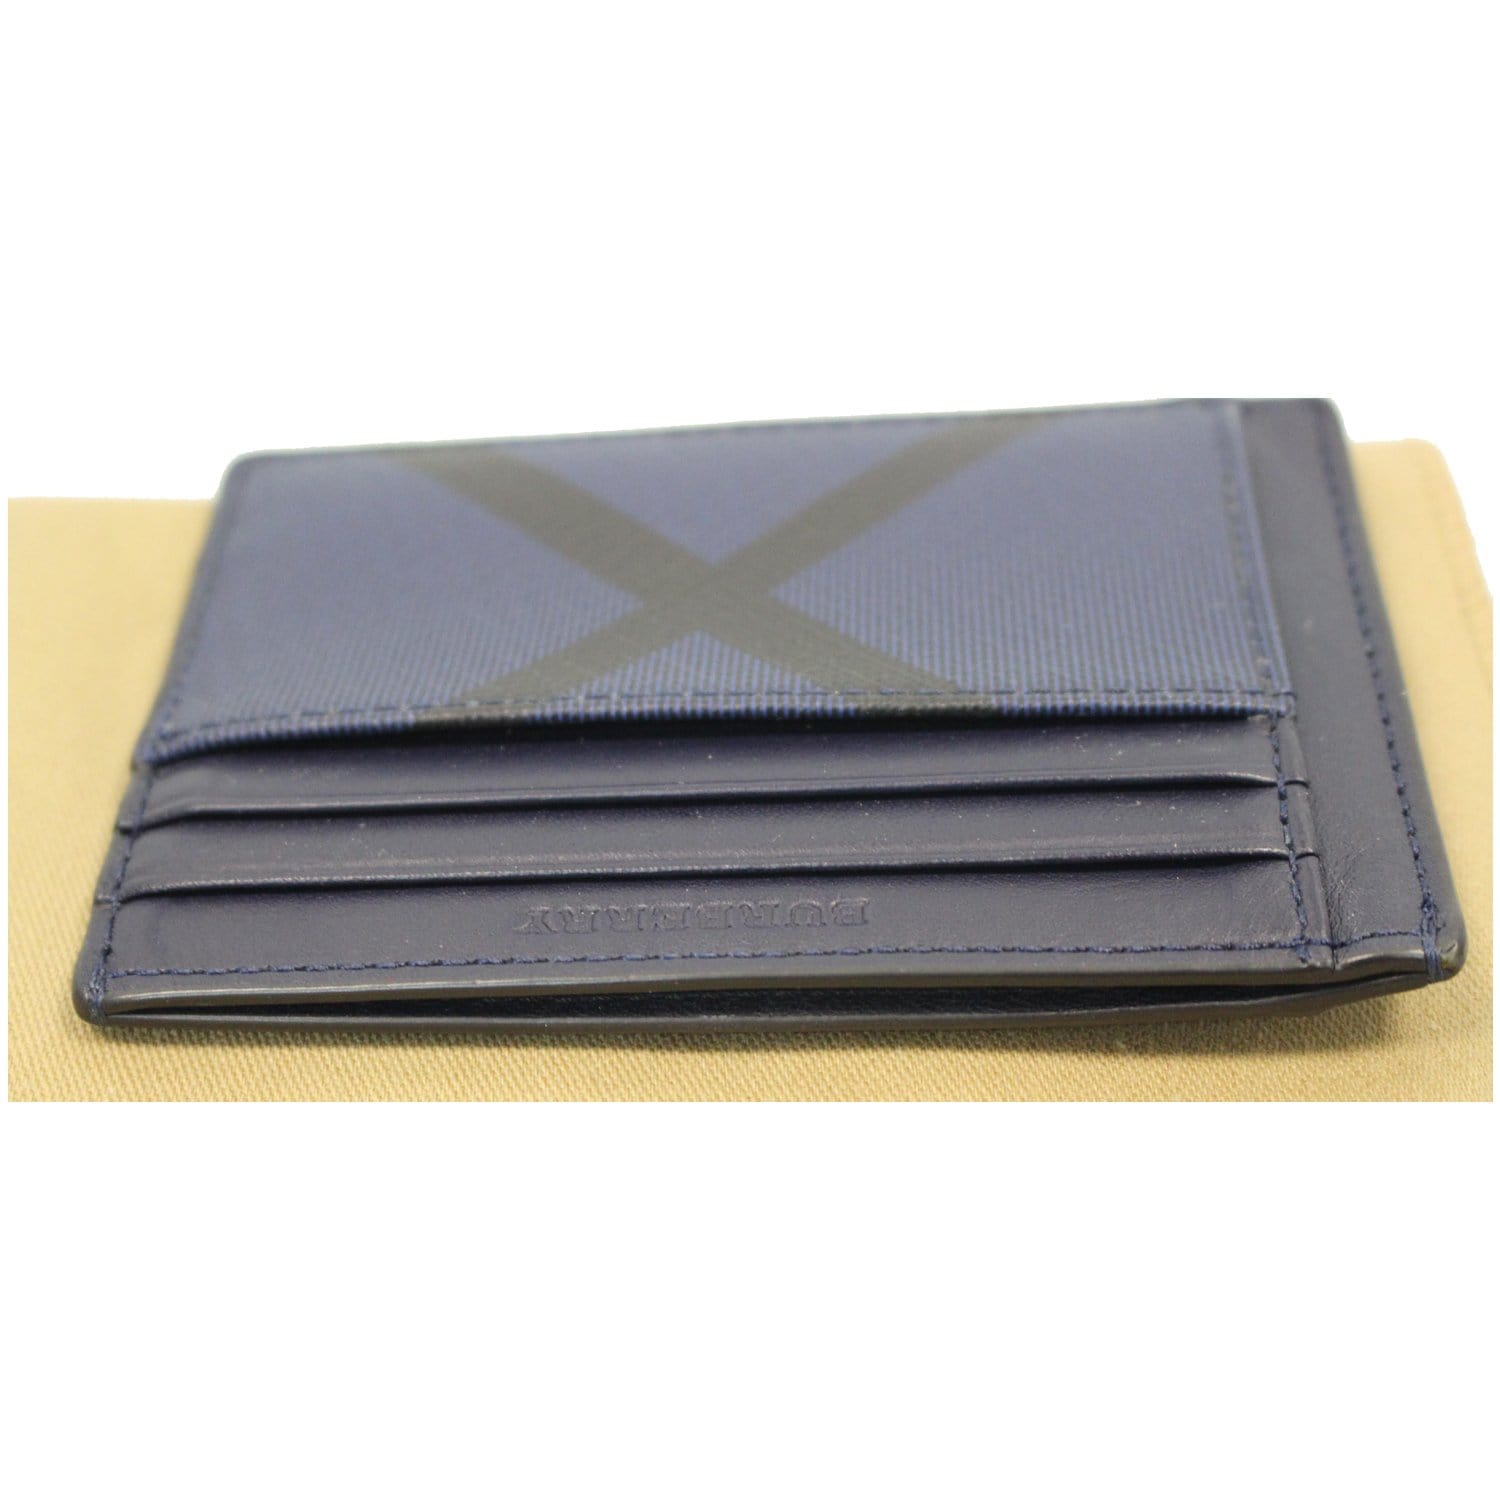 Burberry London Check Folding Card Case 8014514 5045558483443